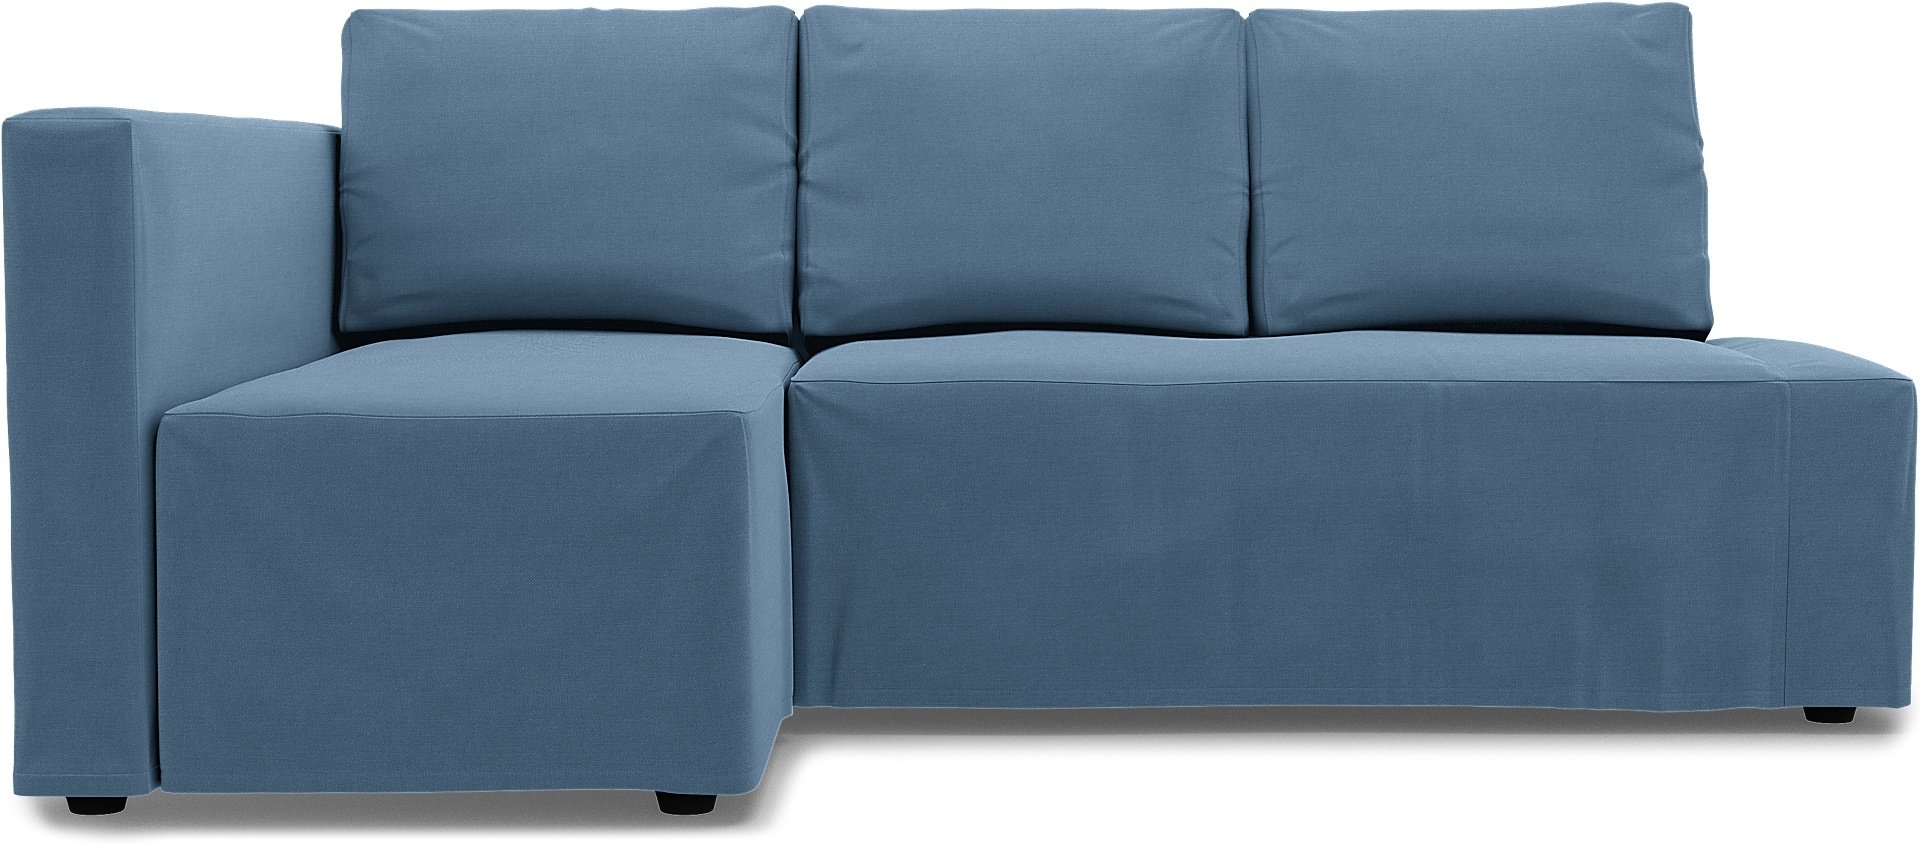 IKEA - Friheten Sofa Bed with Left Chaise Cover, Vintage Blue, Linen - Bemz